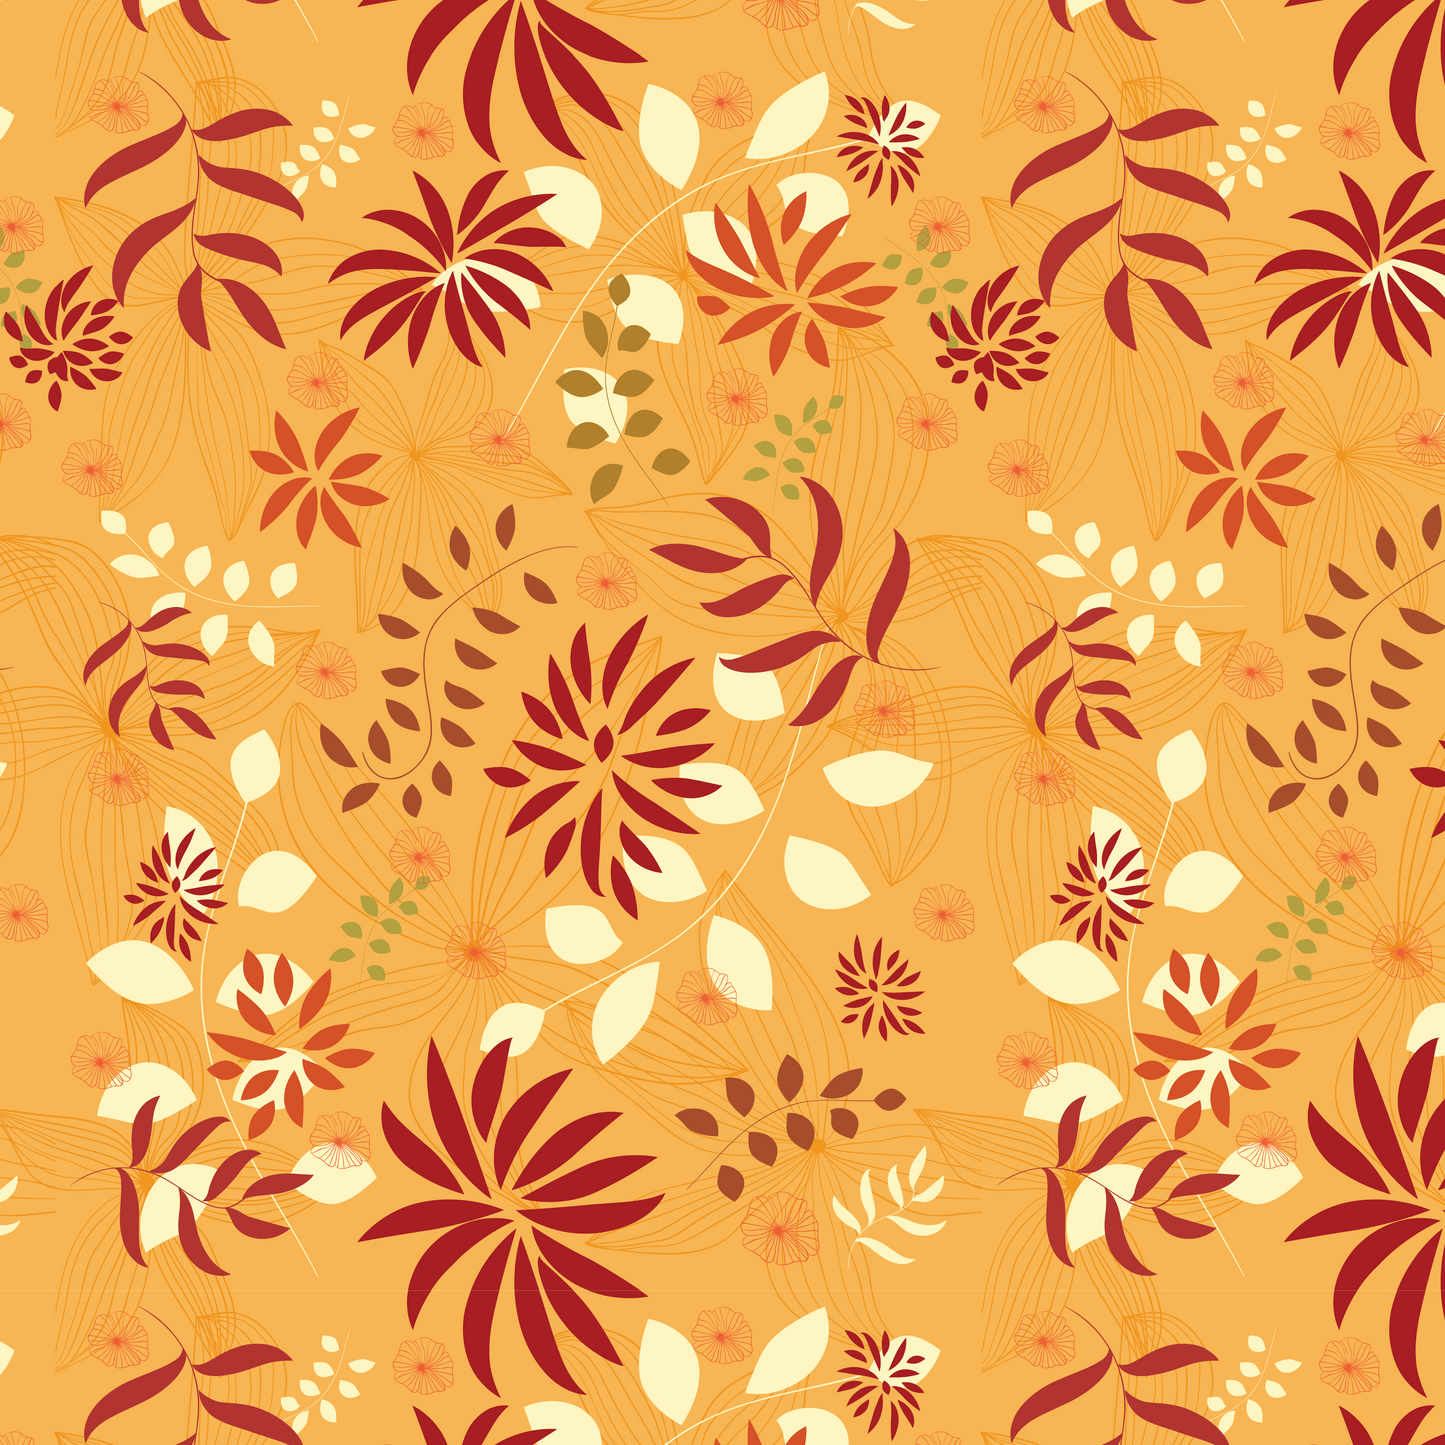 Floral with Orange Background Floral 00018